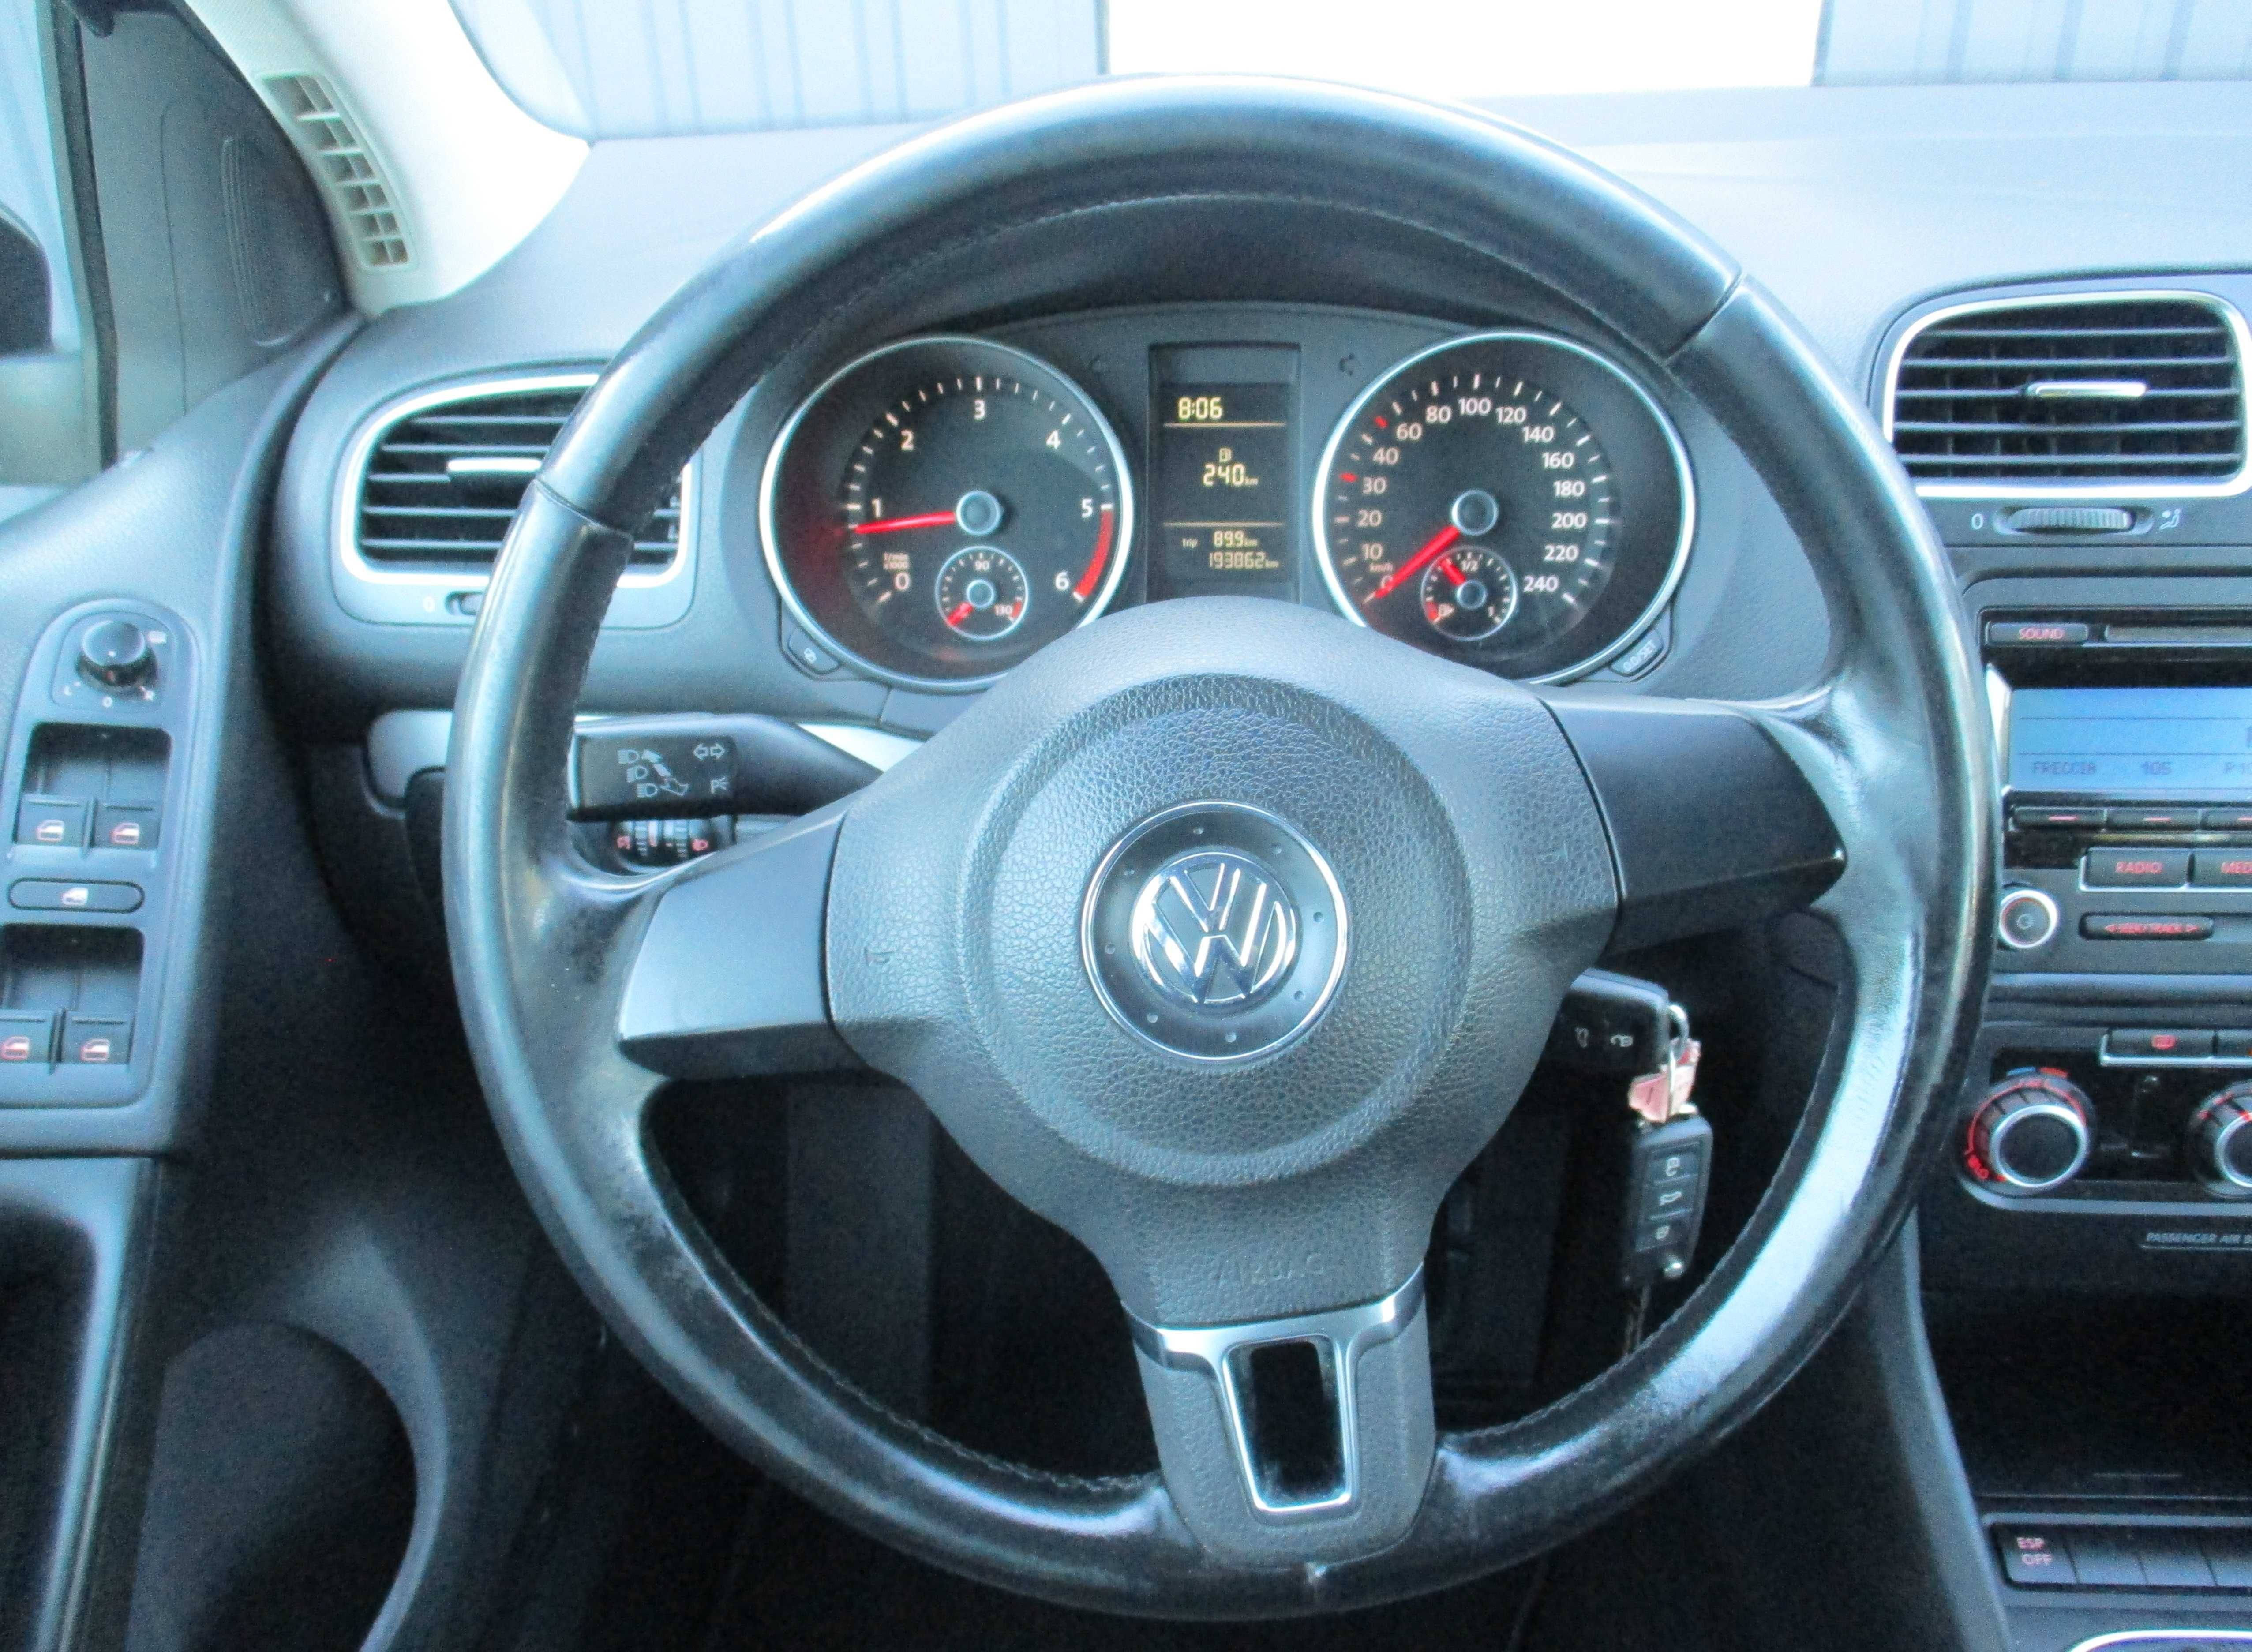 Sprzedam Volkswagen Golf VI 1,6 TDI 90kM 2010 rok produkcji